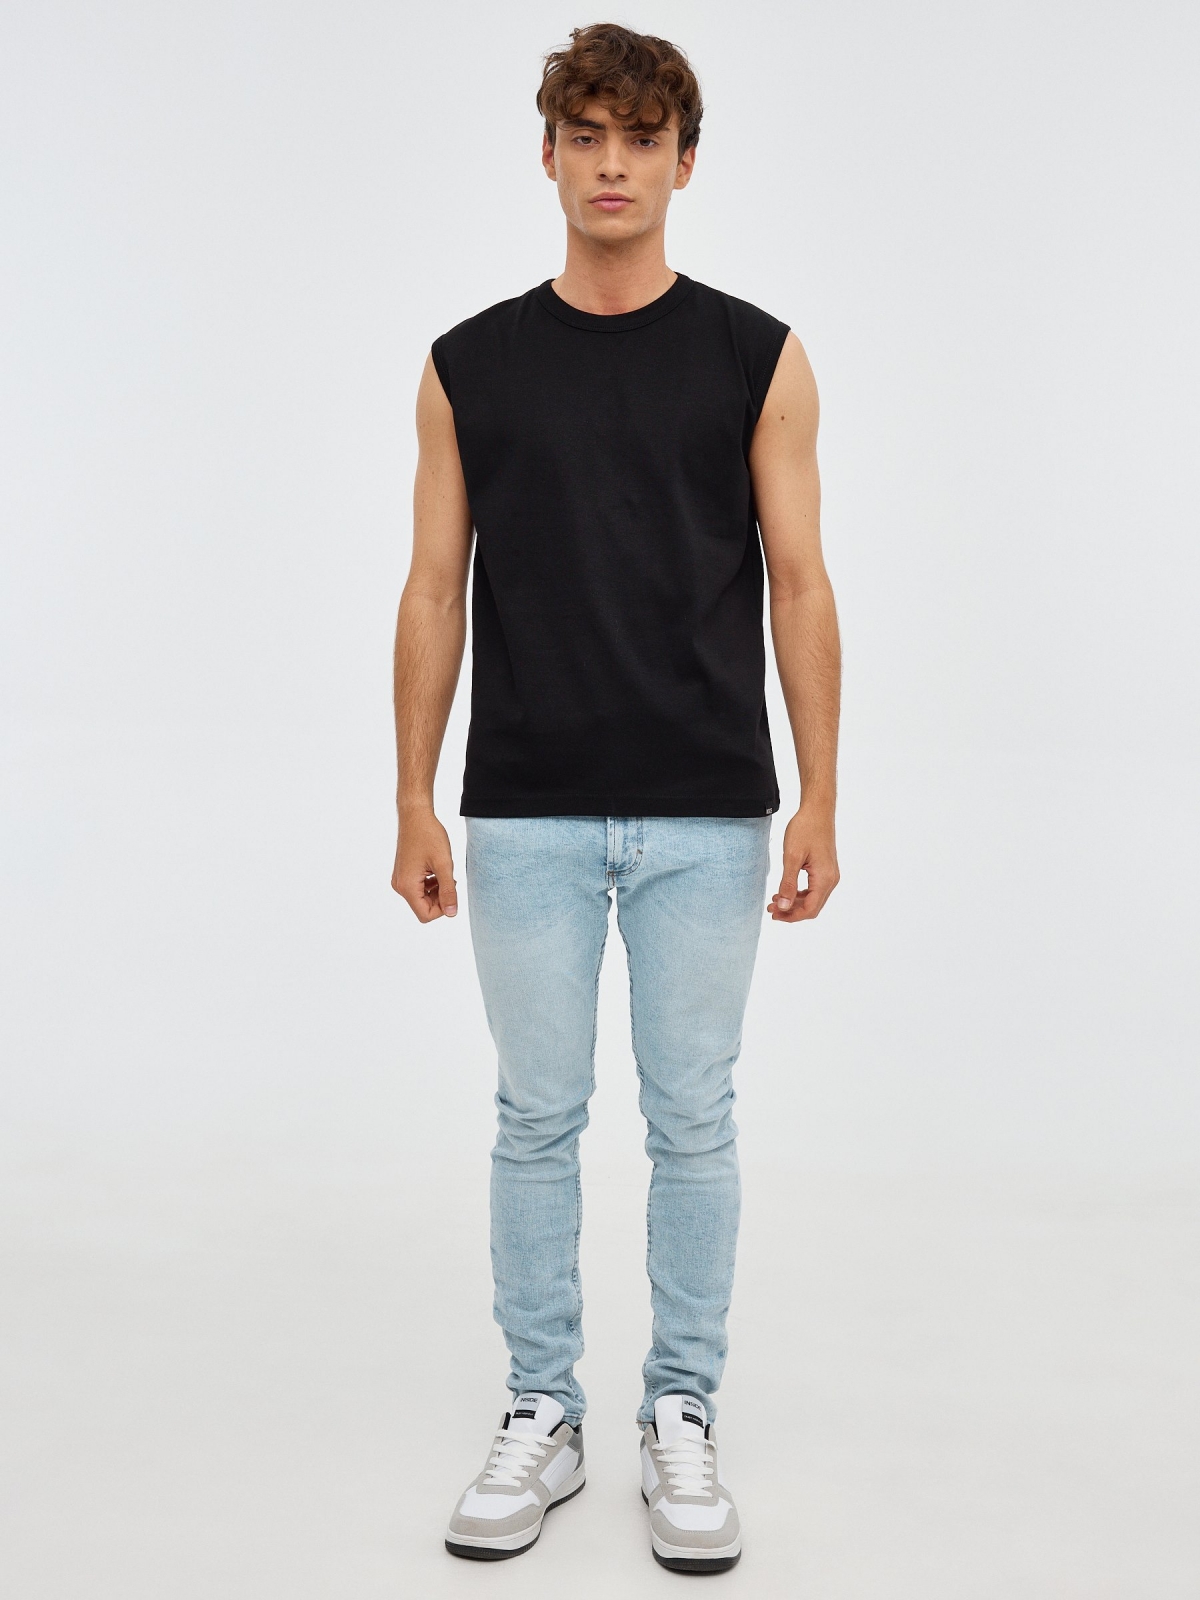 Basic sleeveless t-shirt black front view